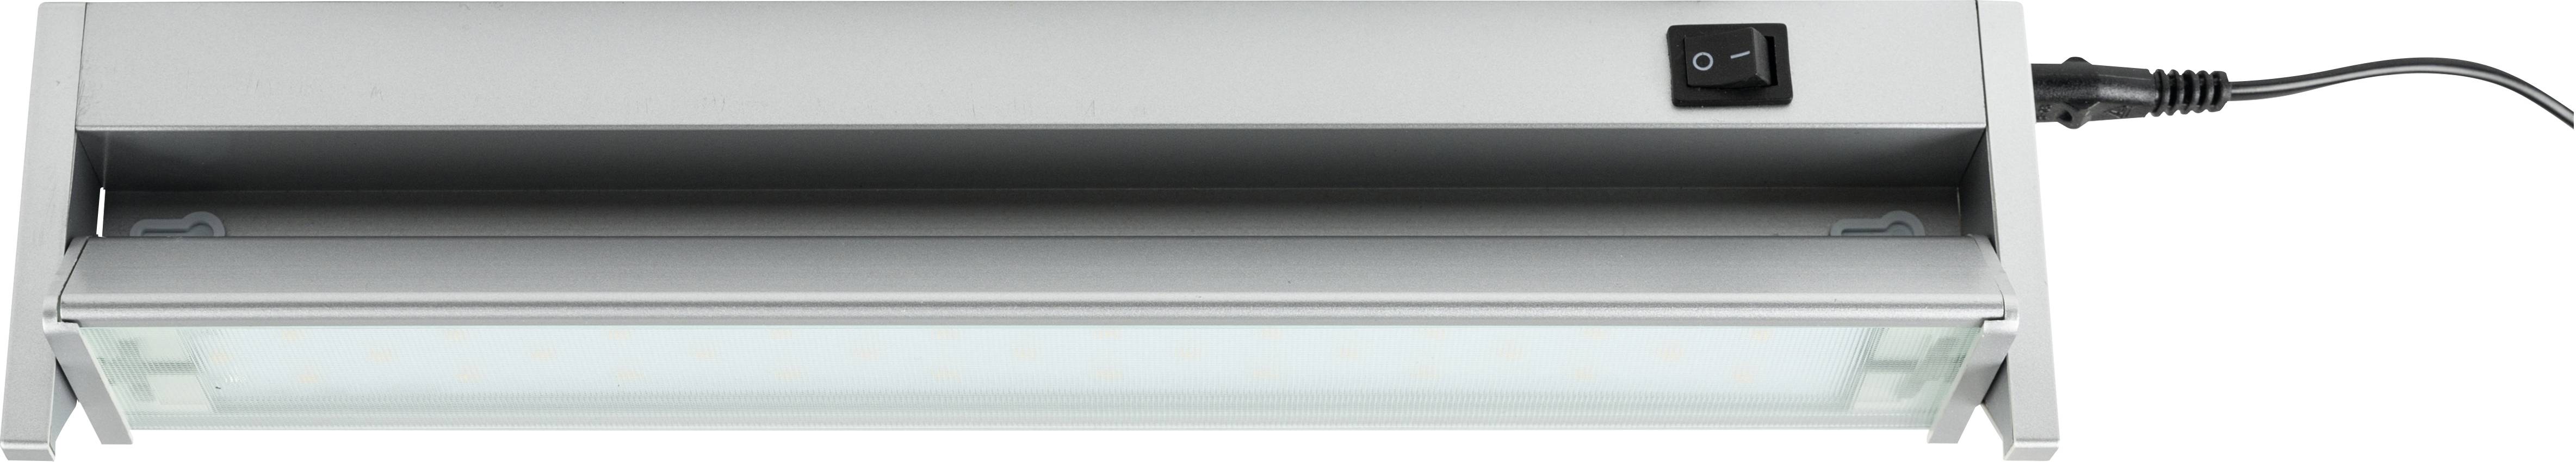 HEITRONIC 29000 Miami LED-Unterbauleuchte 5 W Warmweiß Silber